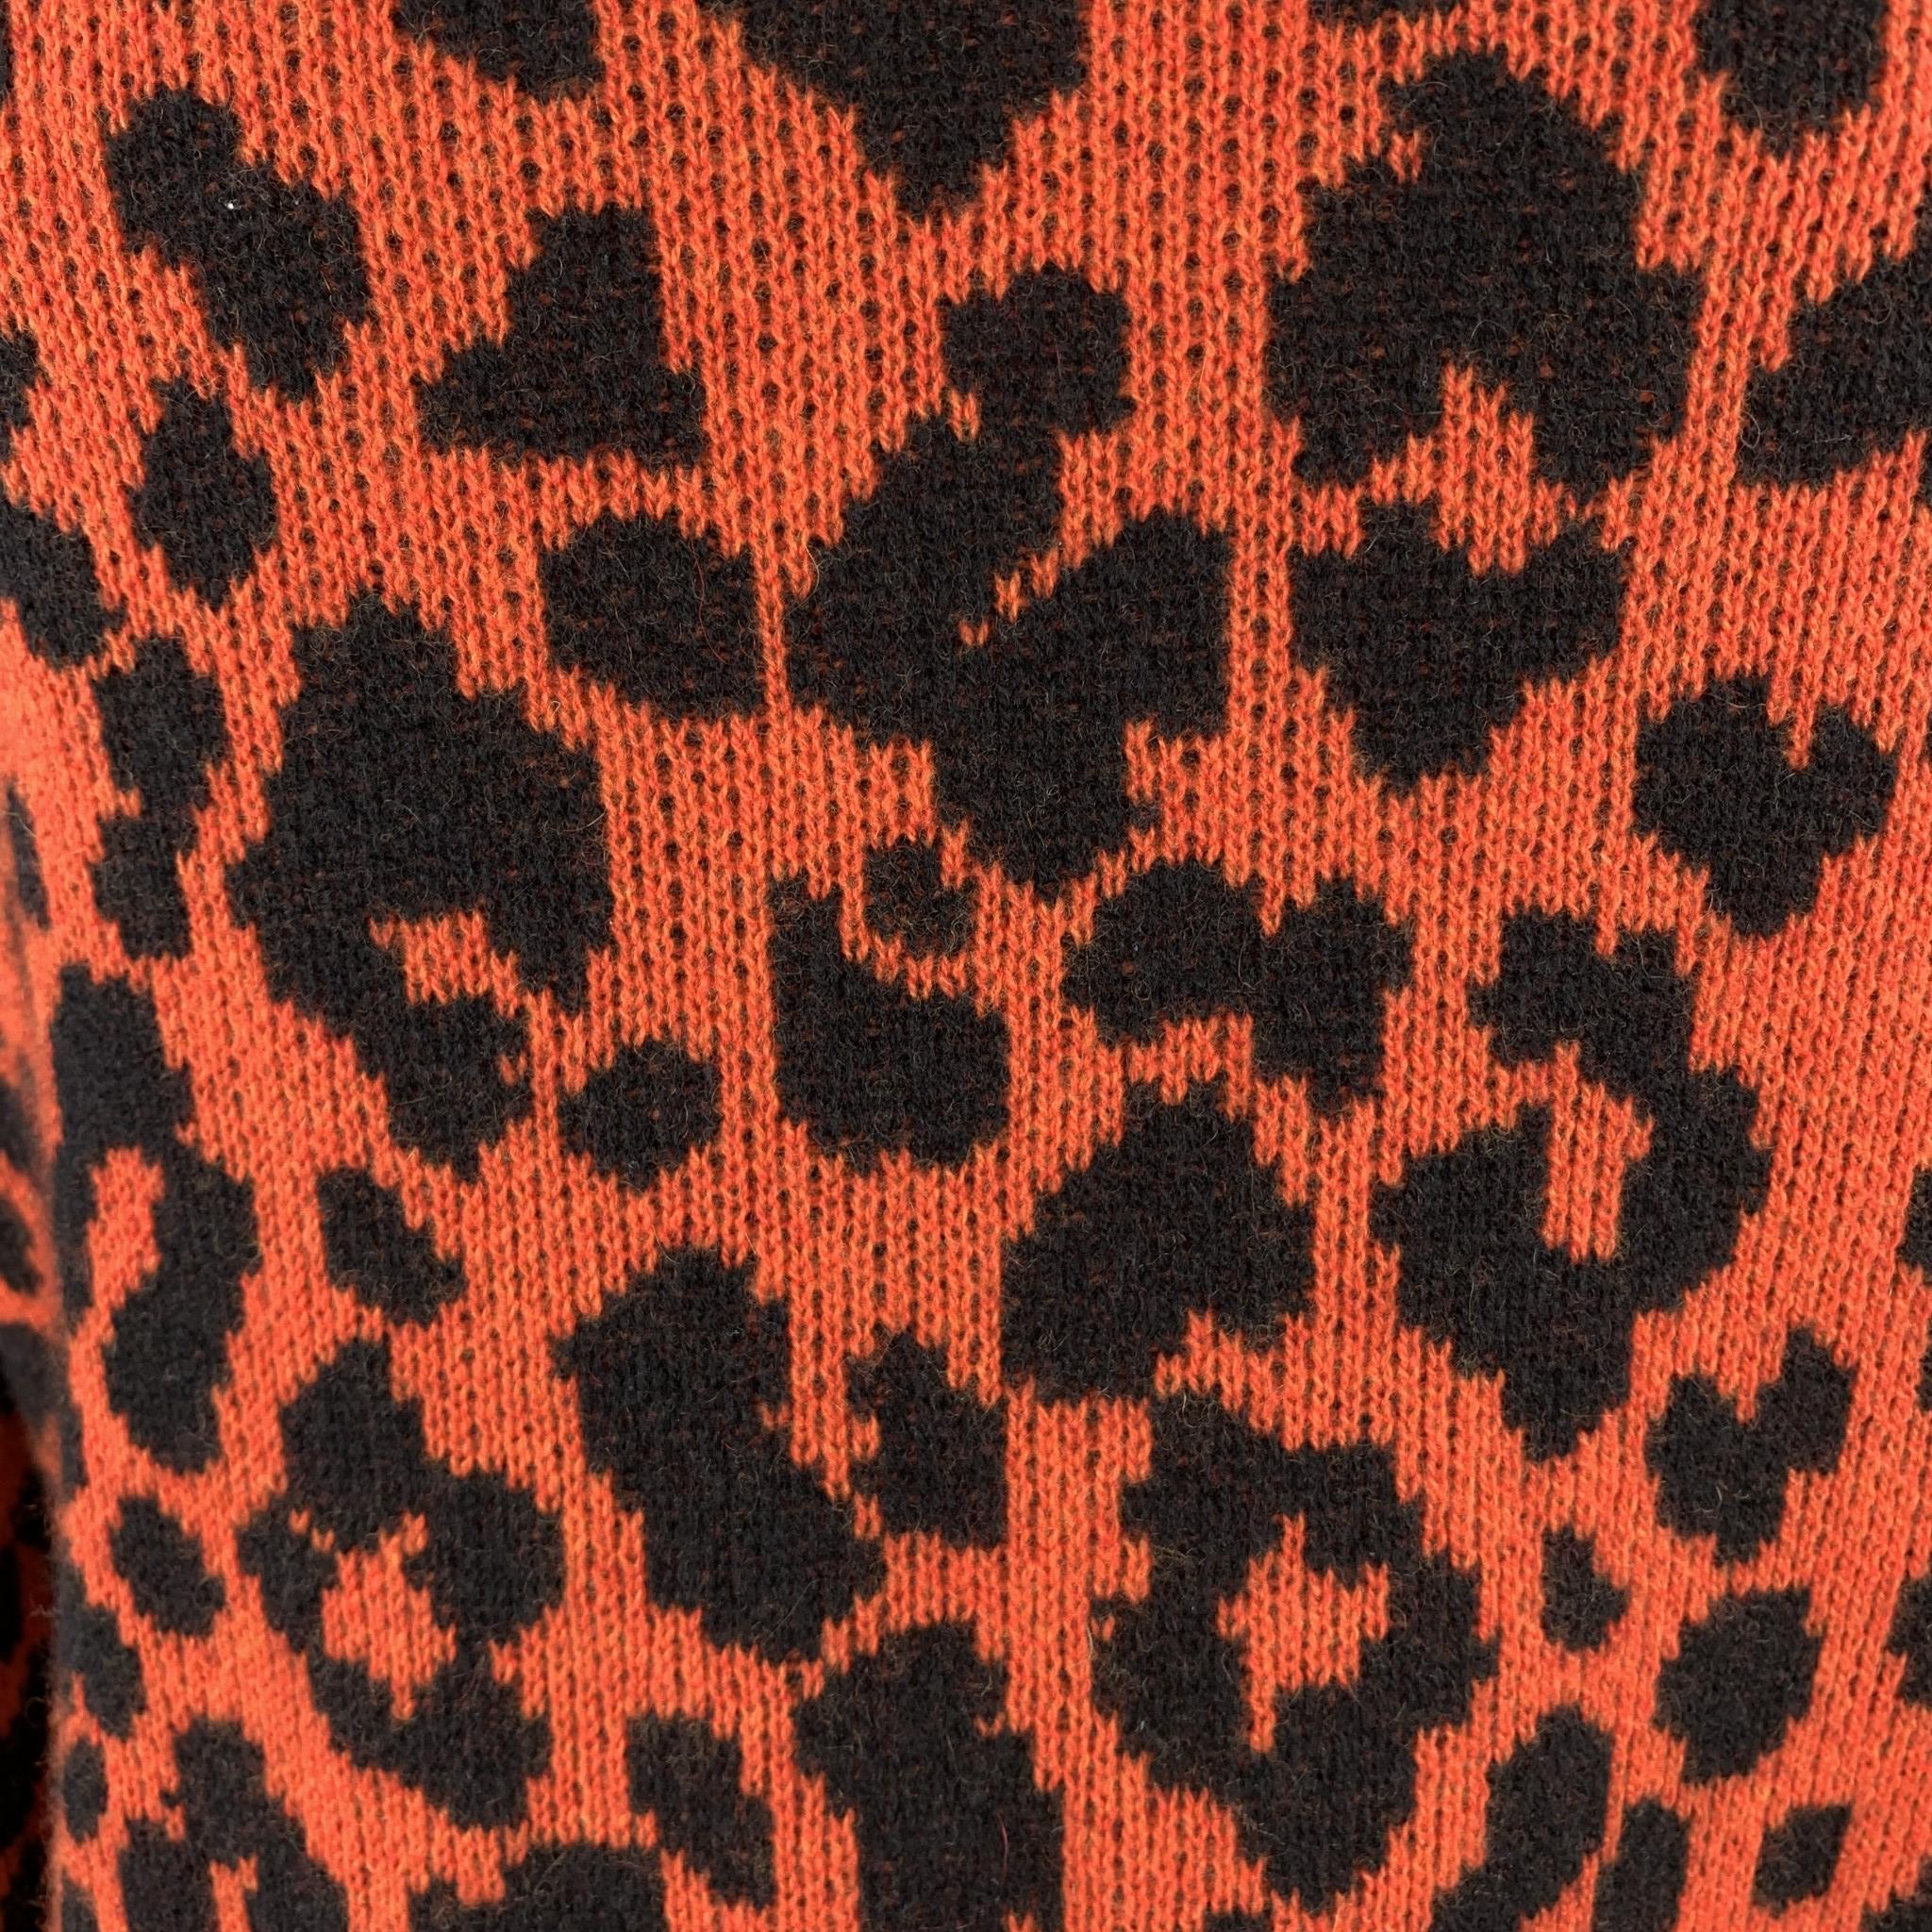 Brown R13 Size L Orange & Black Leopard Print Cashmere Distressed Pullover Sweater